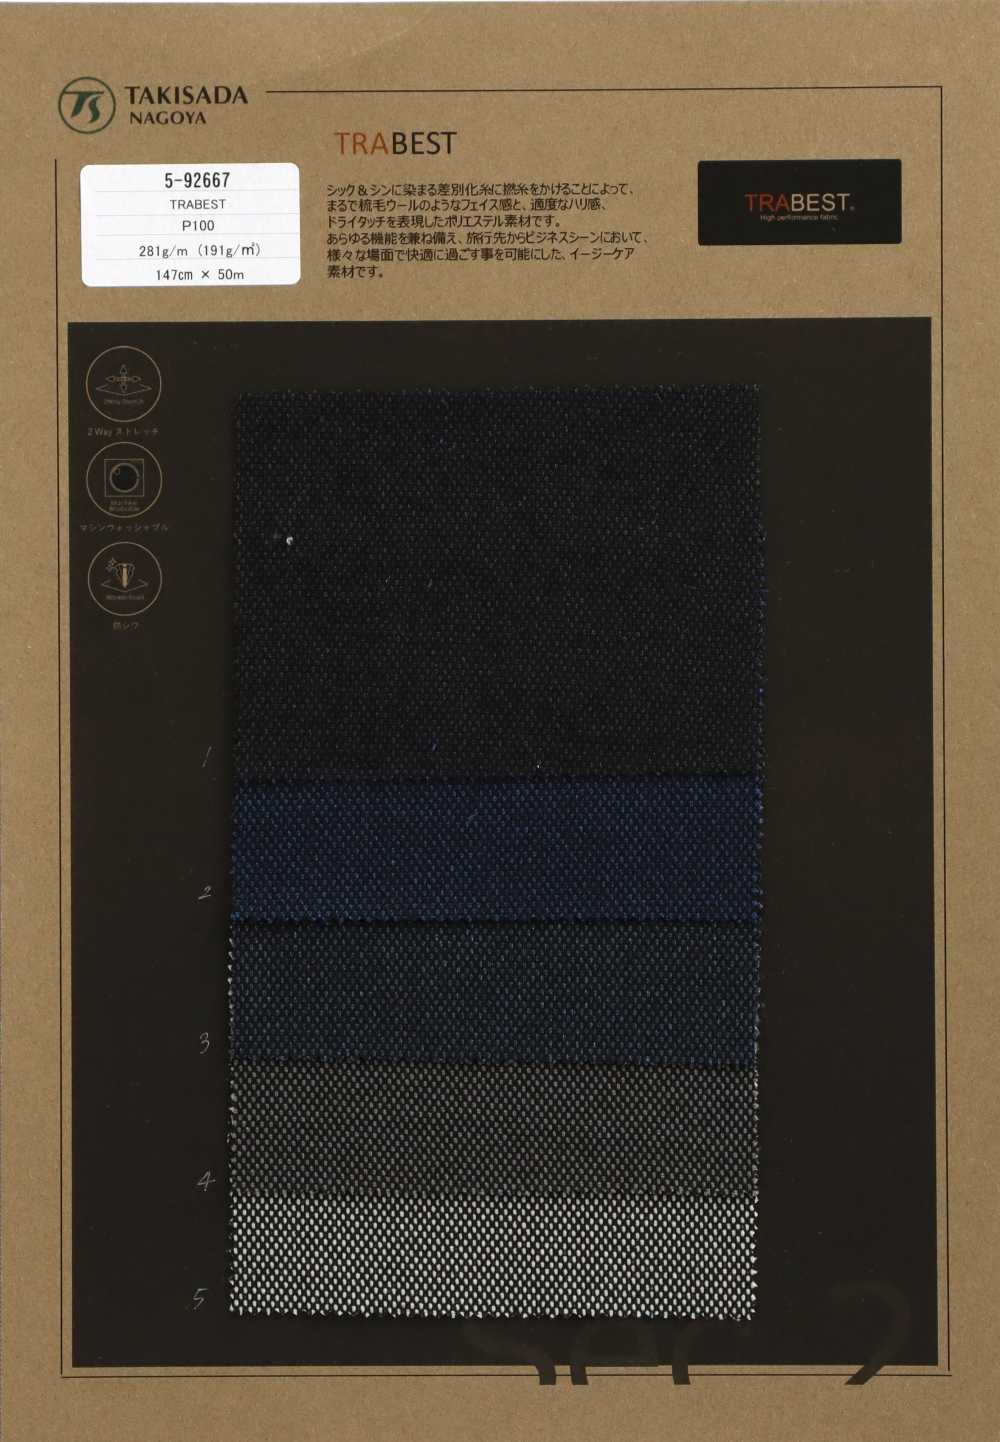 5-92667 TRABEST Soft Touch Bird&#39;s-eye Pattern[Textile / Fabric] Takisada Nagoya